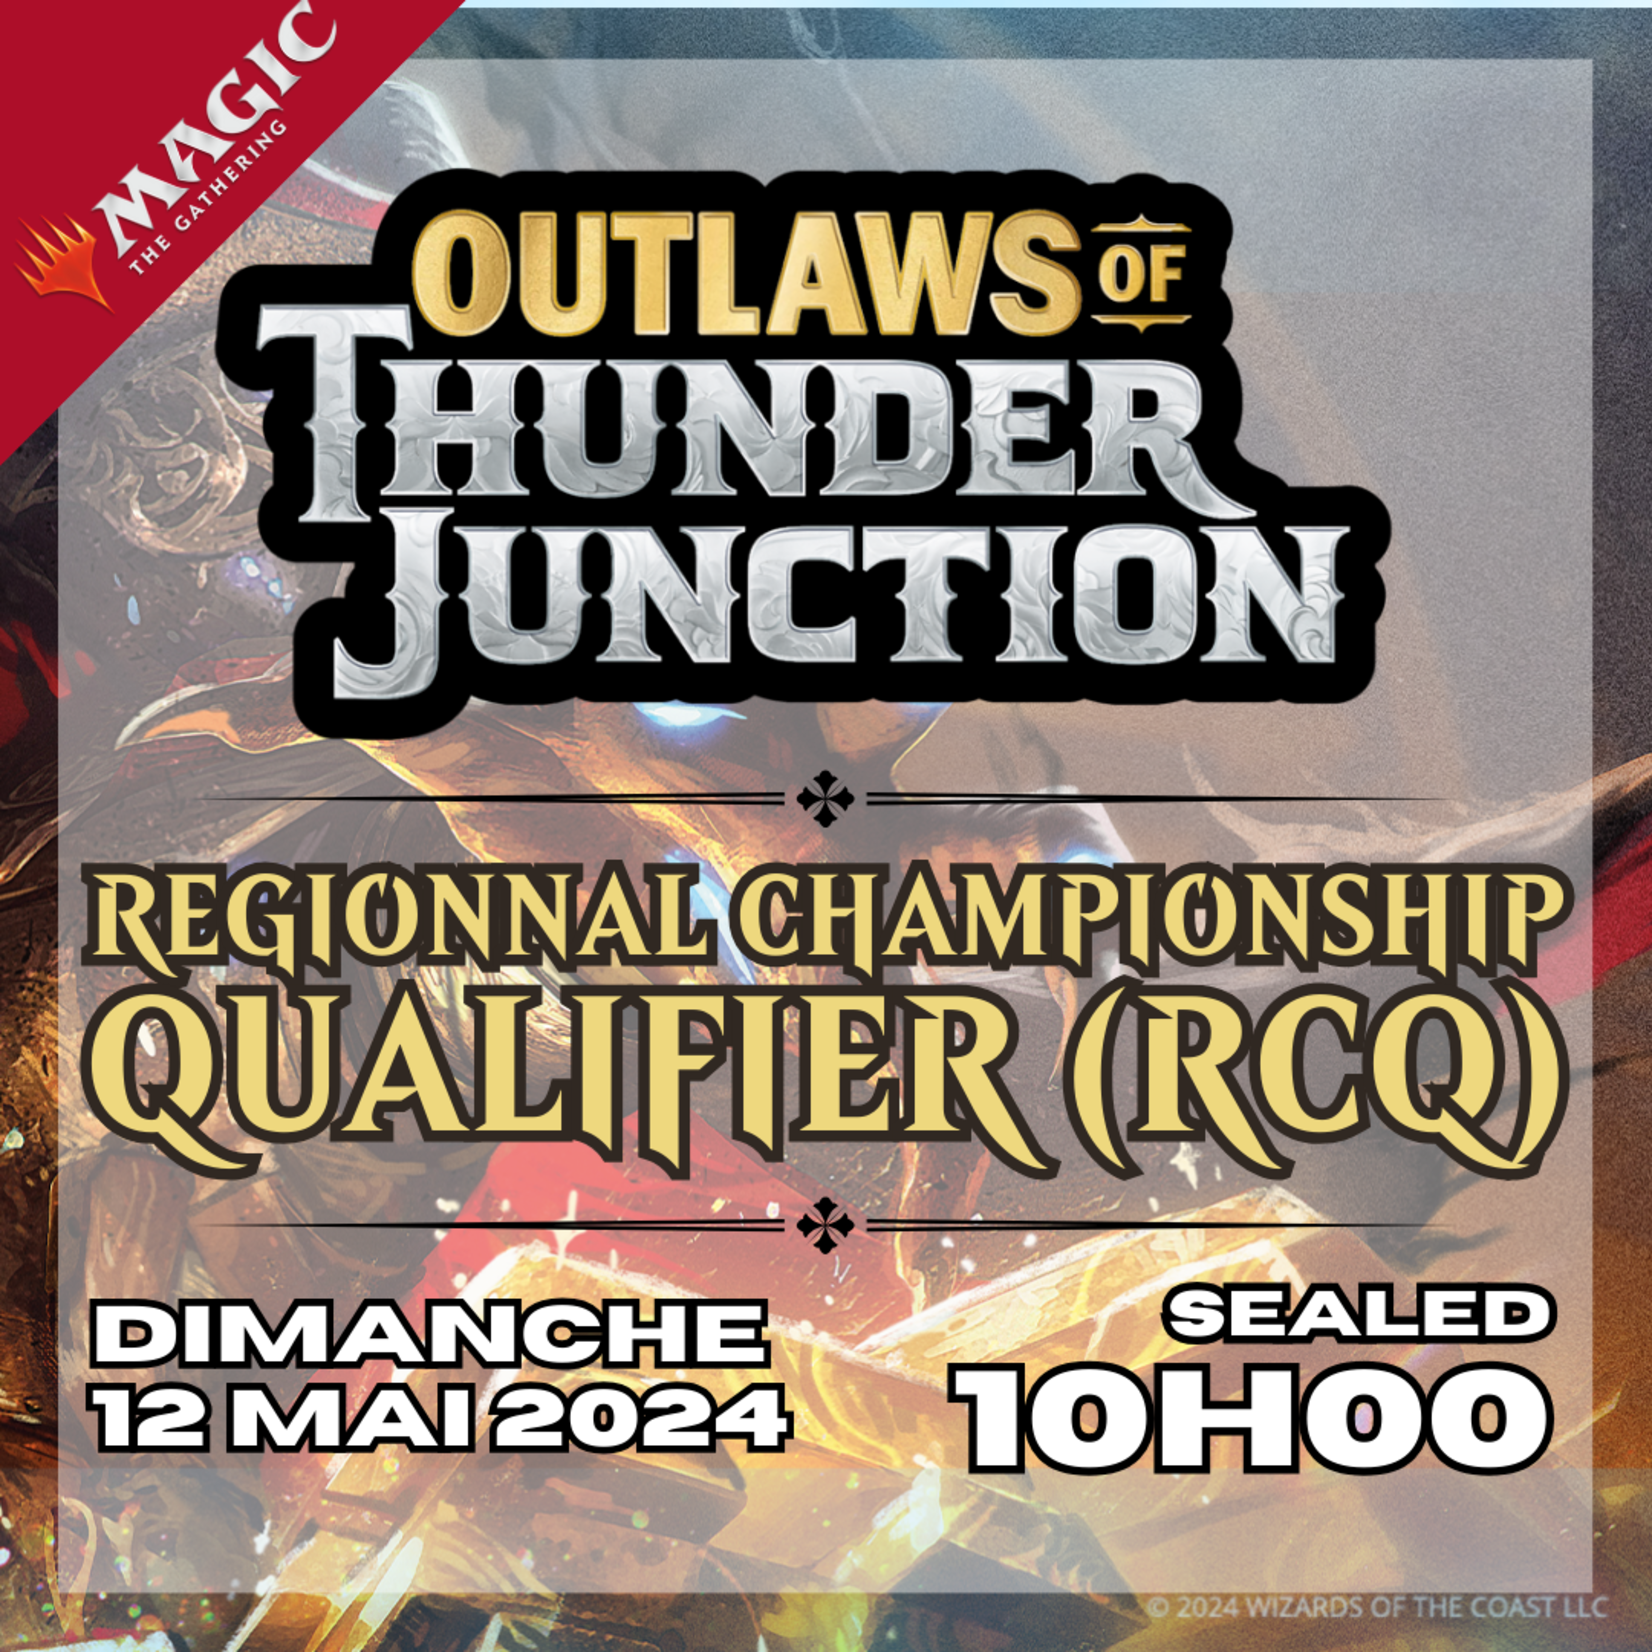 Regionnal Championship Qualifier (RCQ) - Dimanche 12 mai 10h00